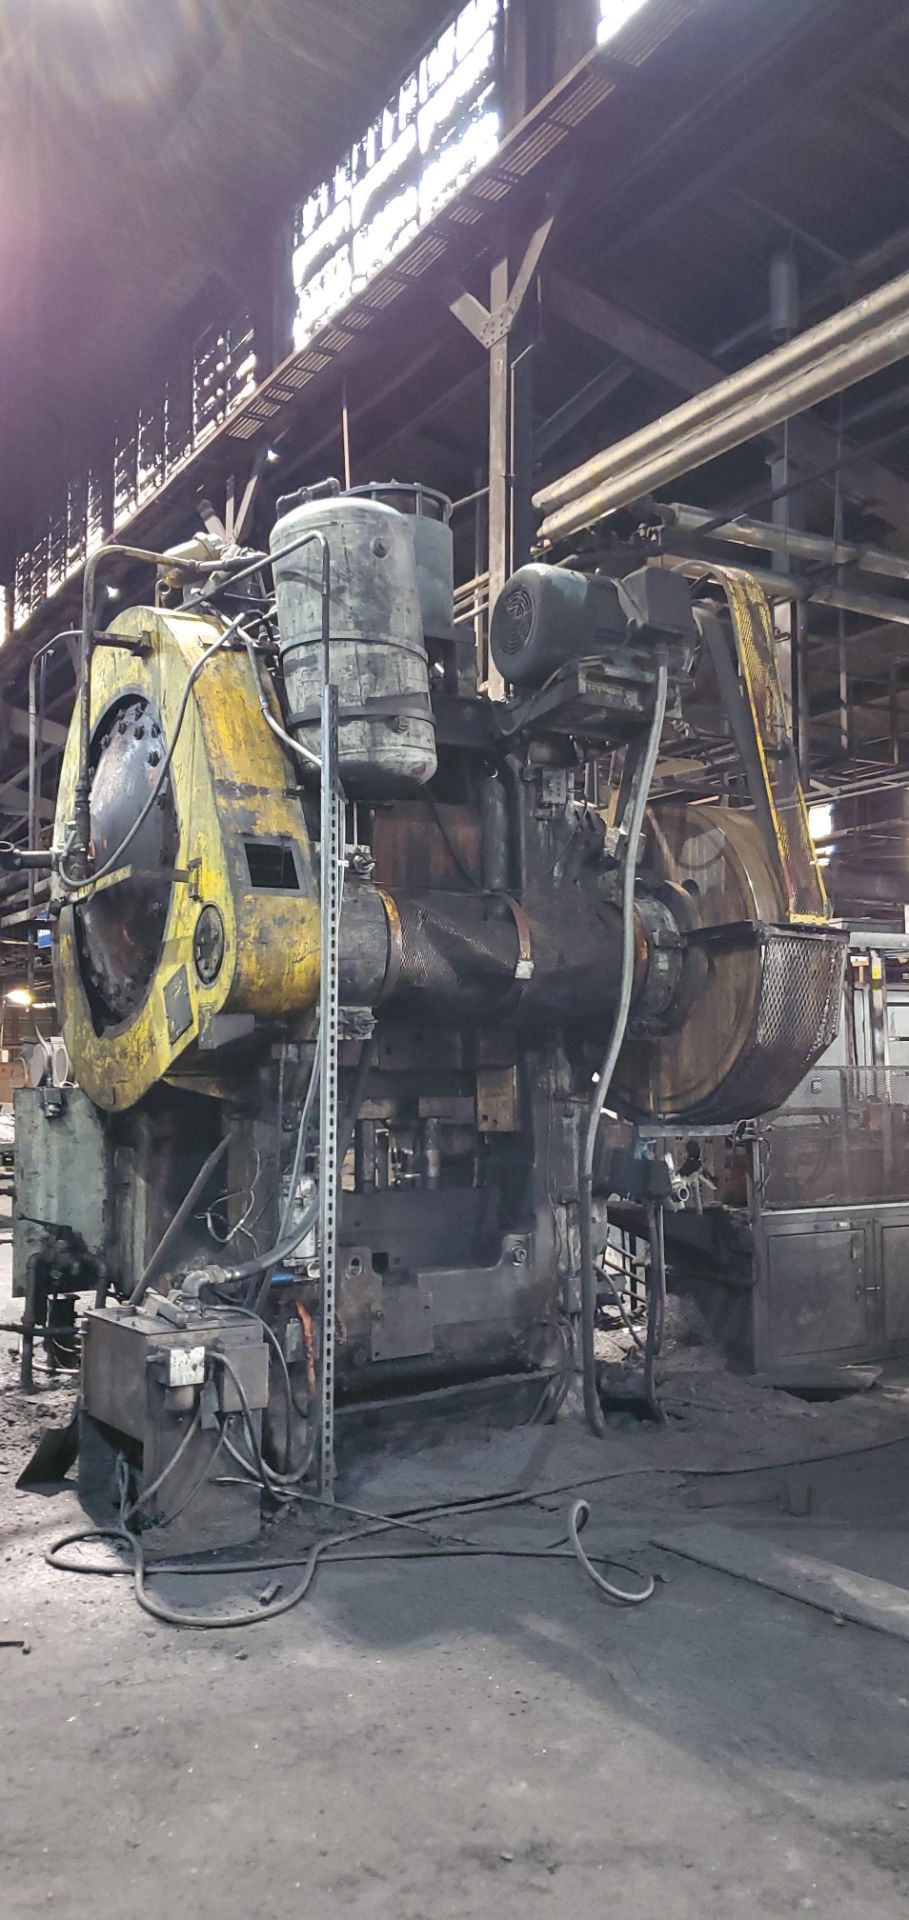 Erie 1600-Ton Mechanical Forging Press - Image 16 of 29